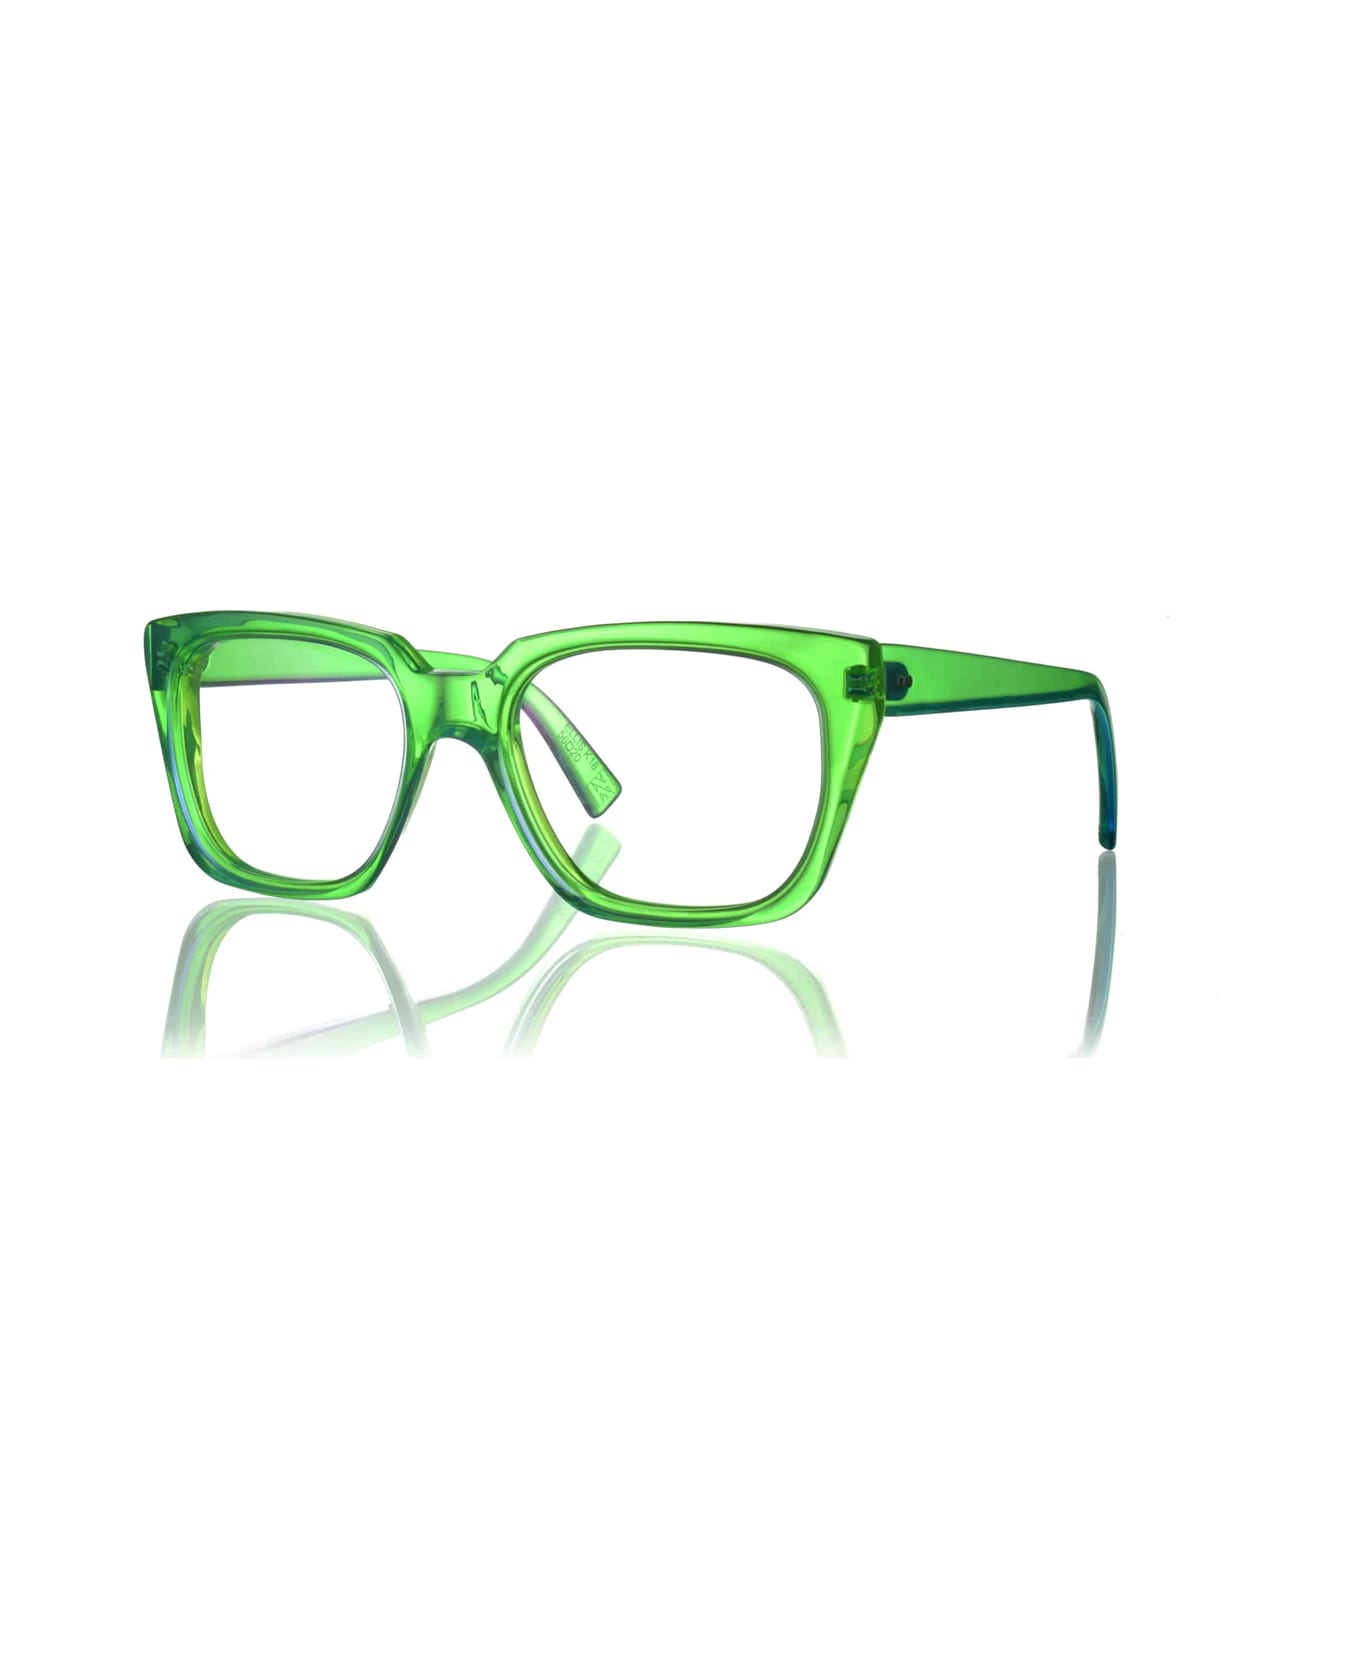 Kirk & Kirk Ellis K18 Glasses - Verde アイウェア